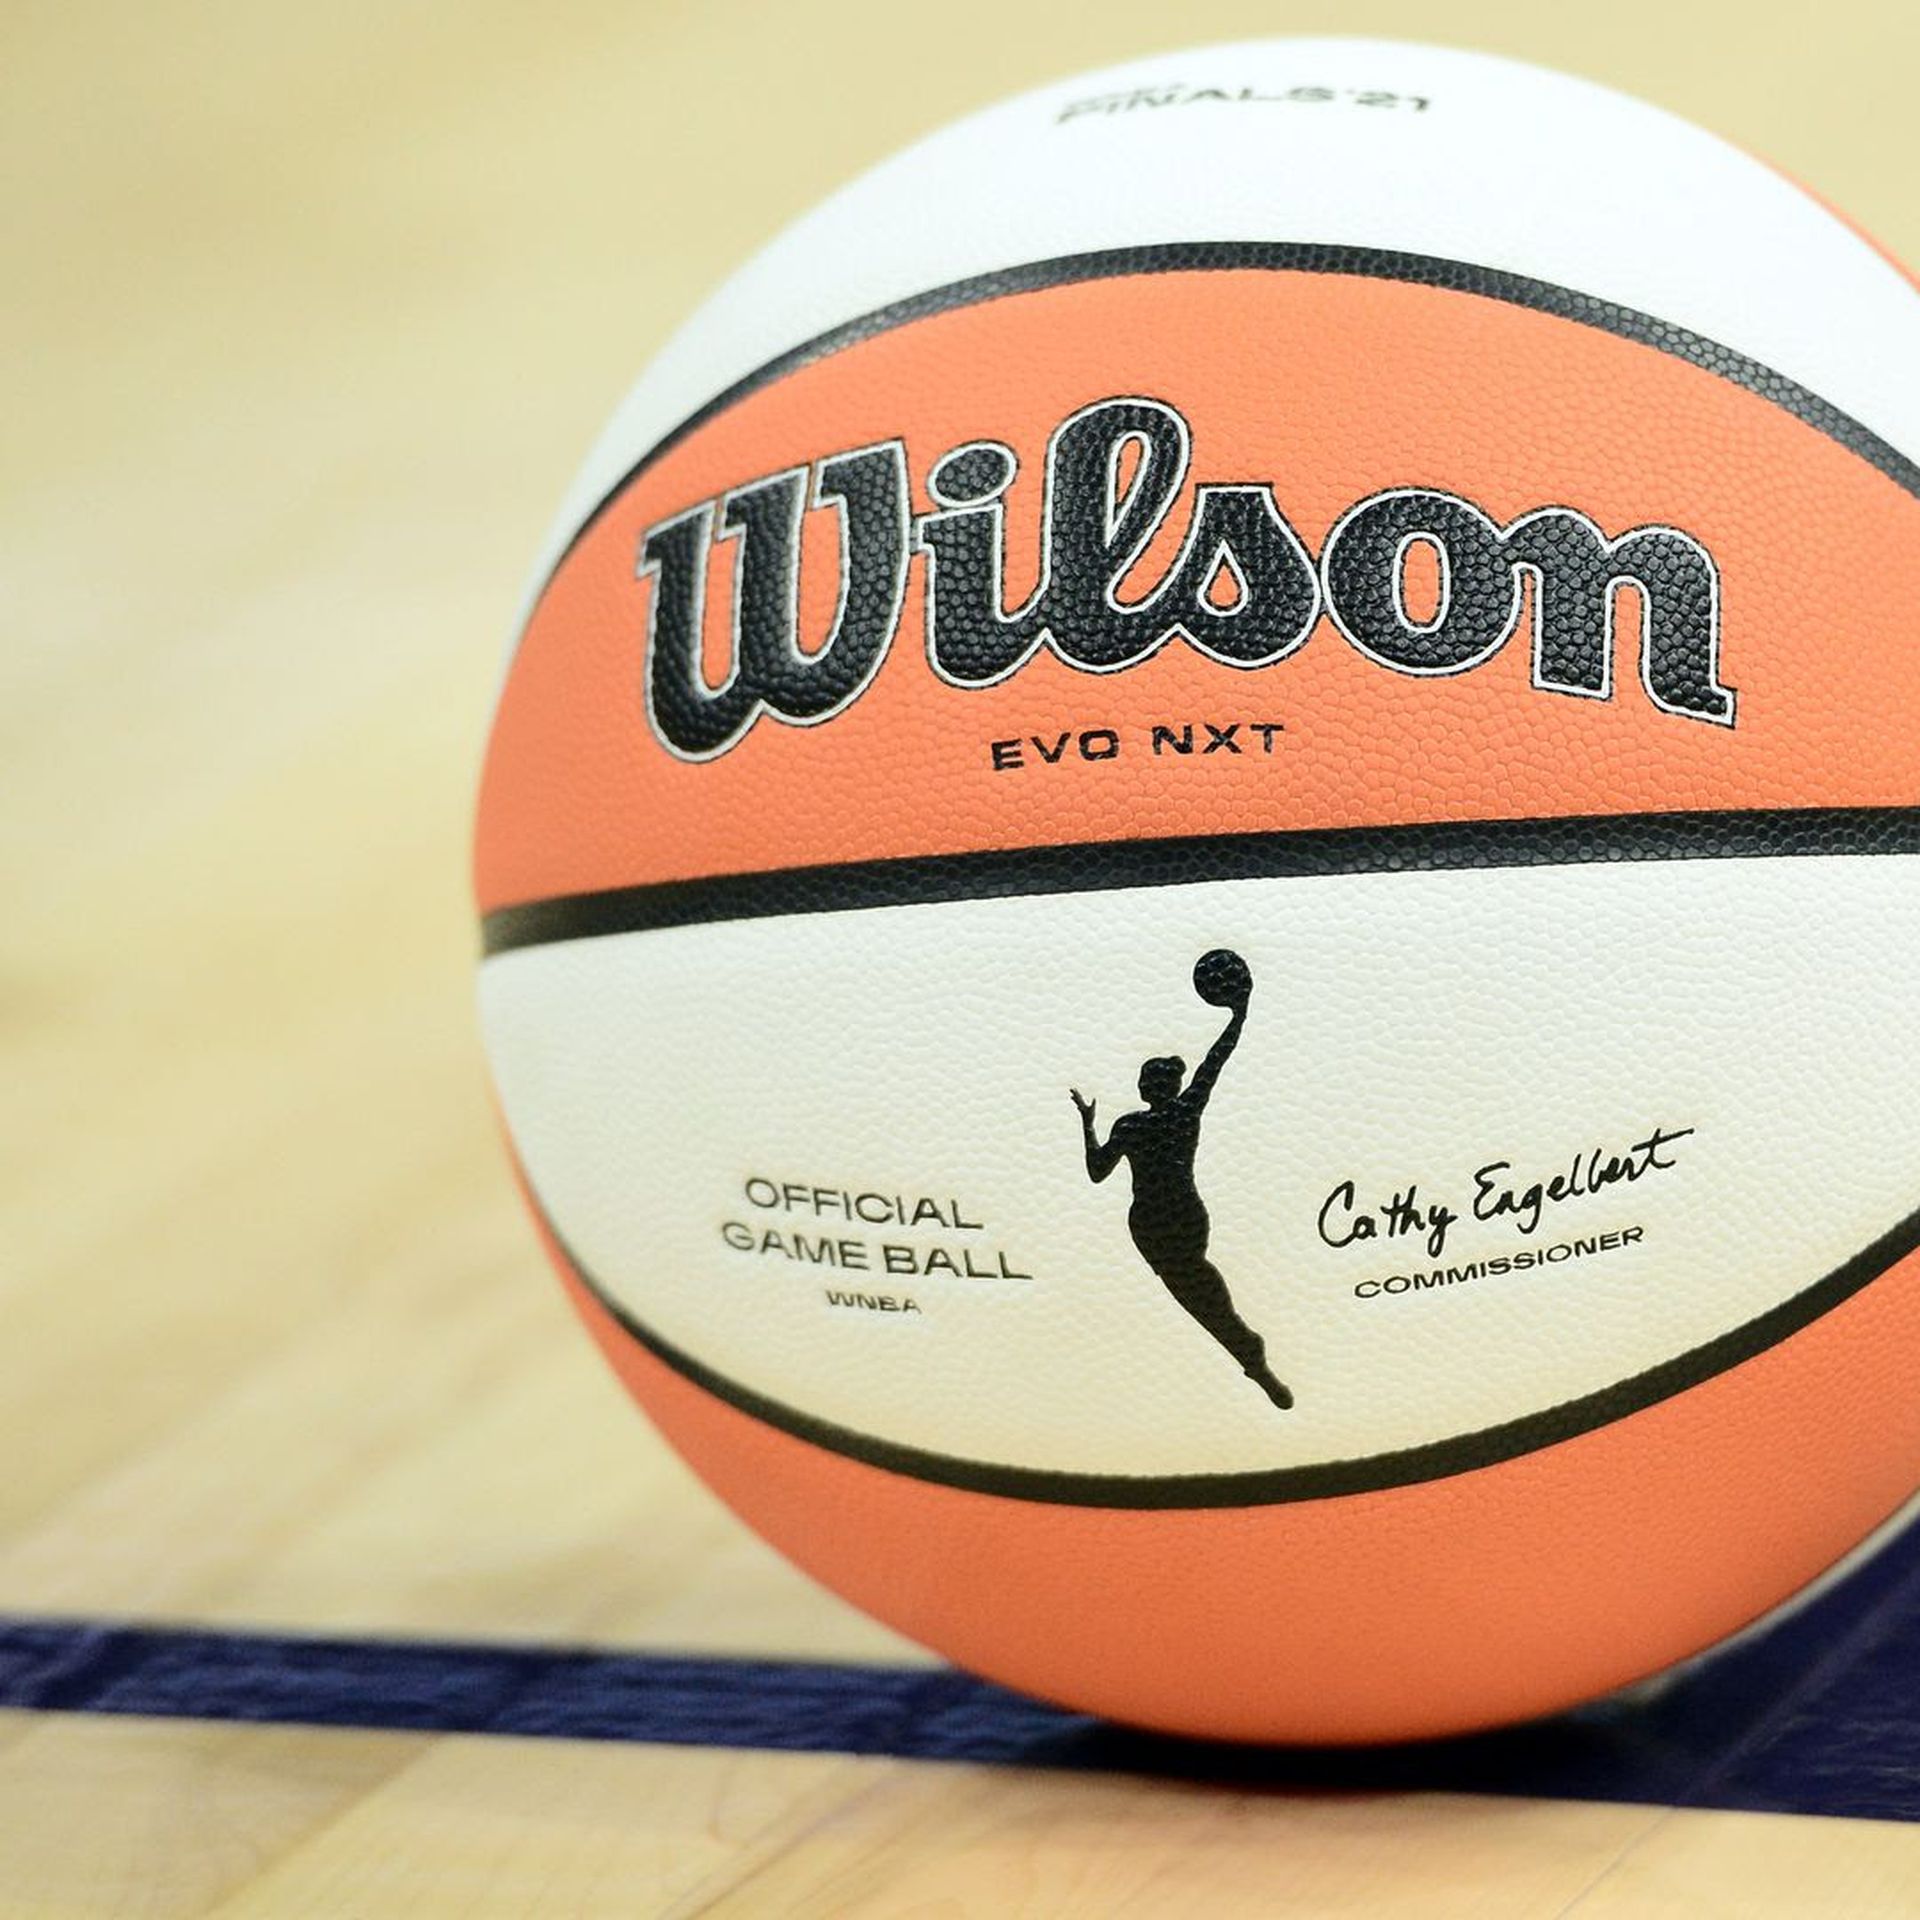 Tennessee loves winners' Nashville puts together bid for WNBA team